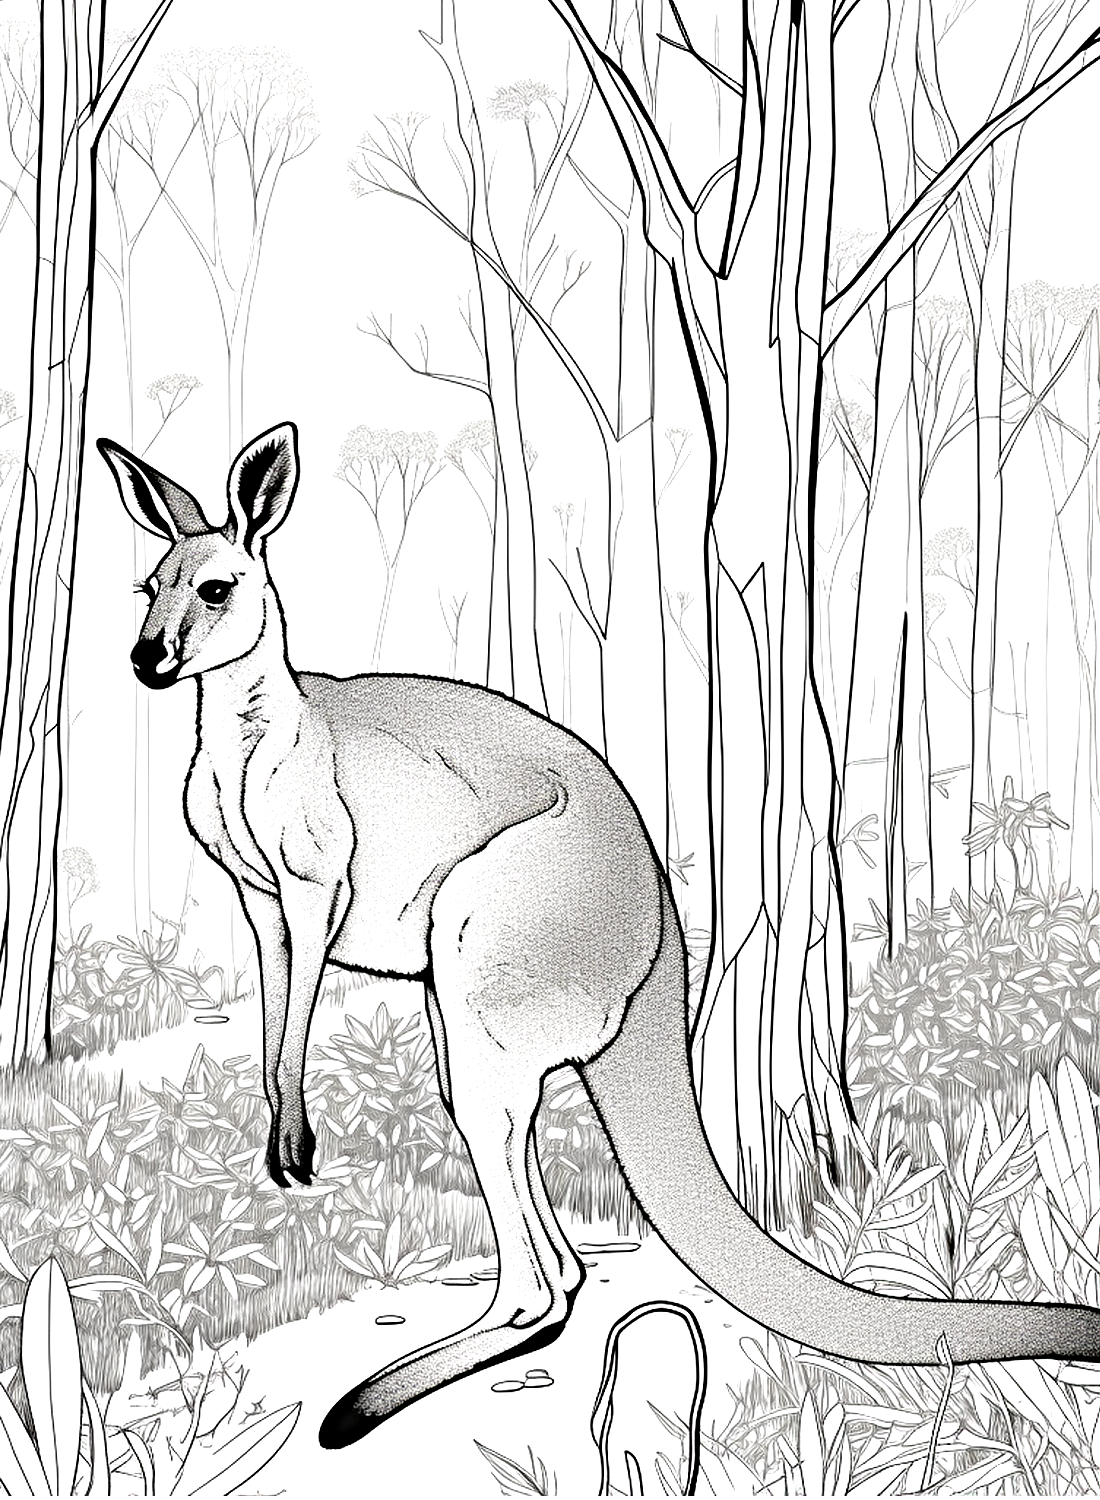 Kangaroo in the forest from Kangaroo